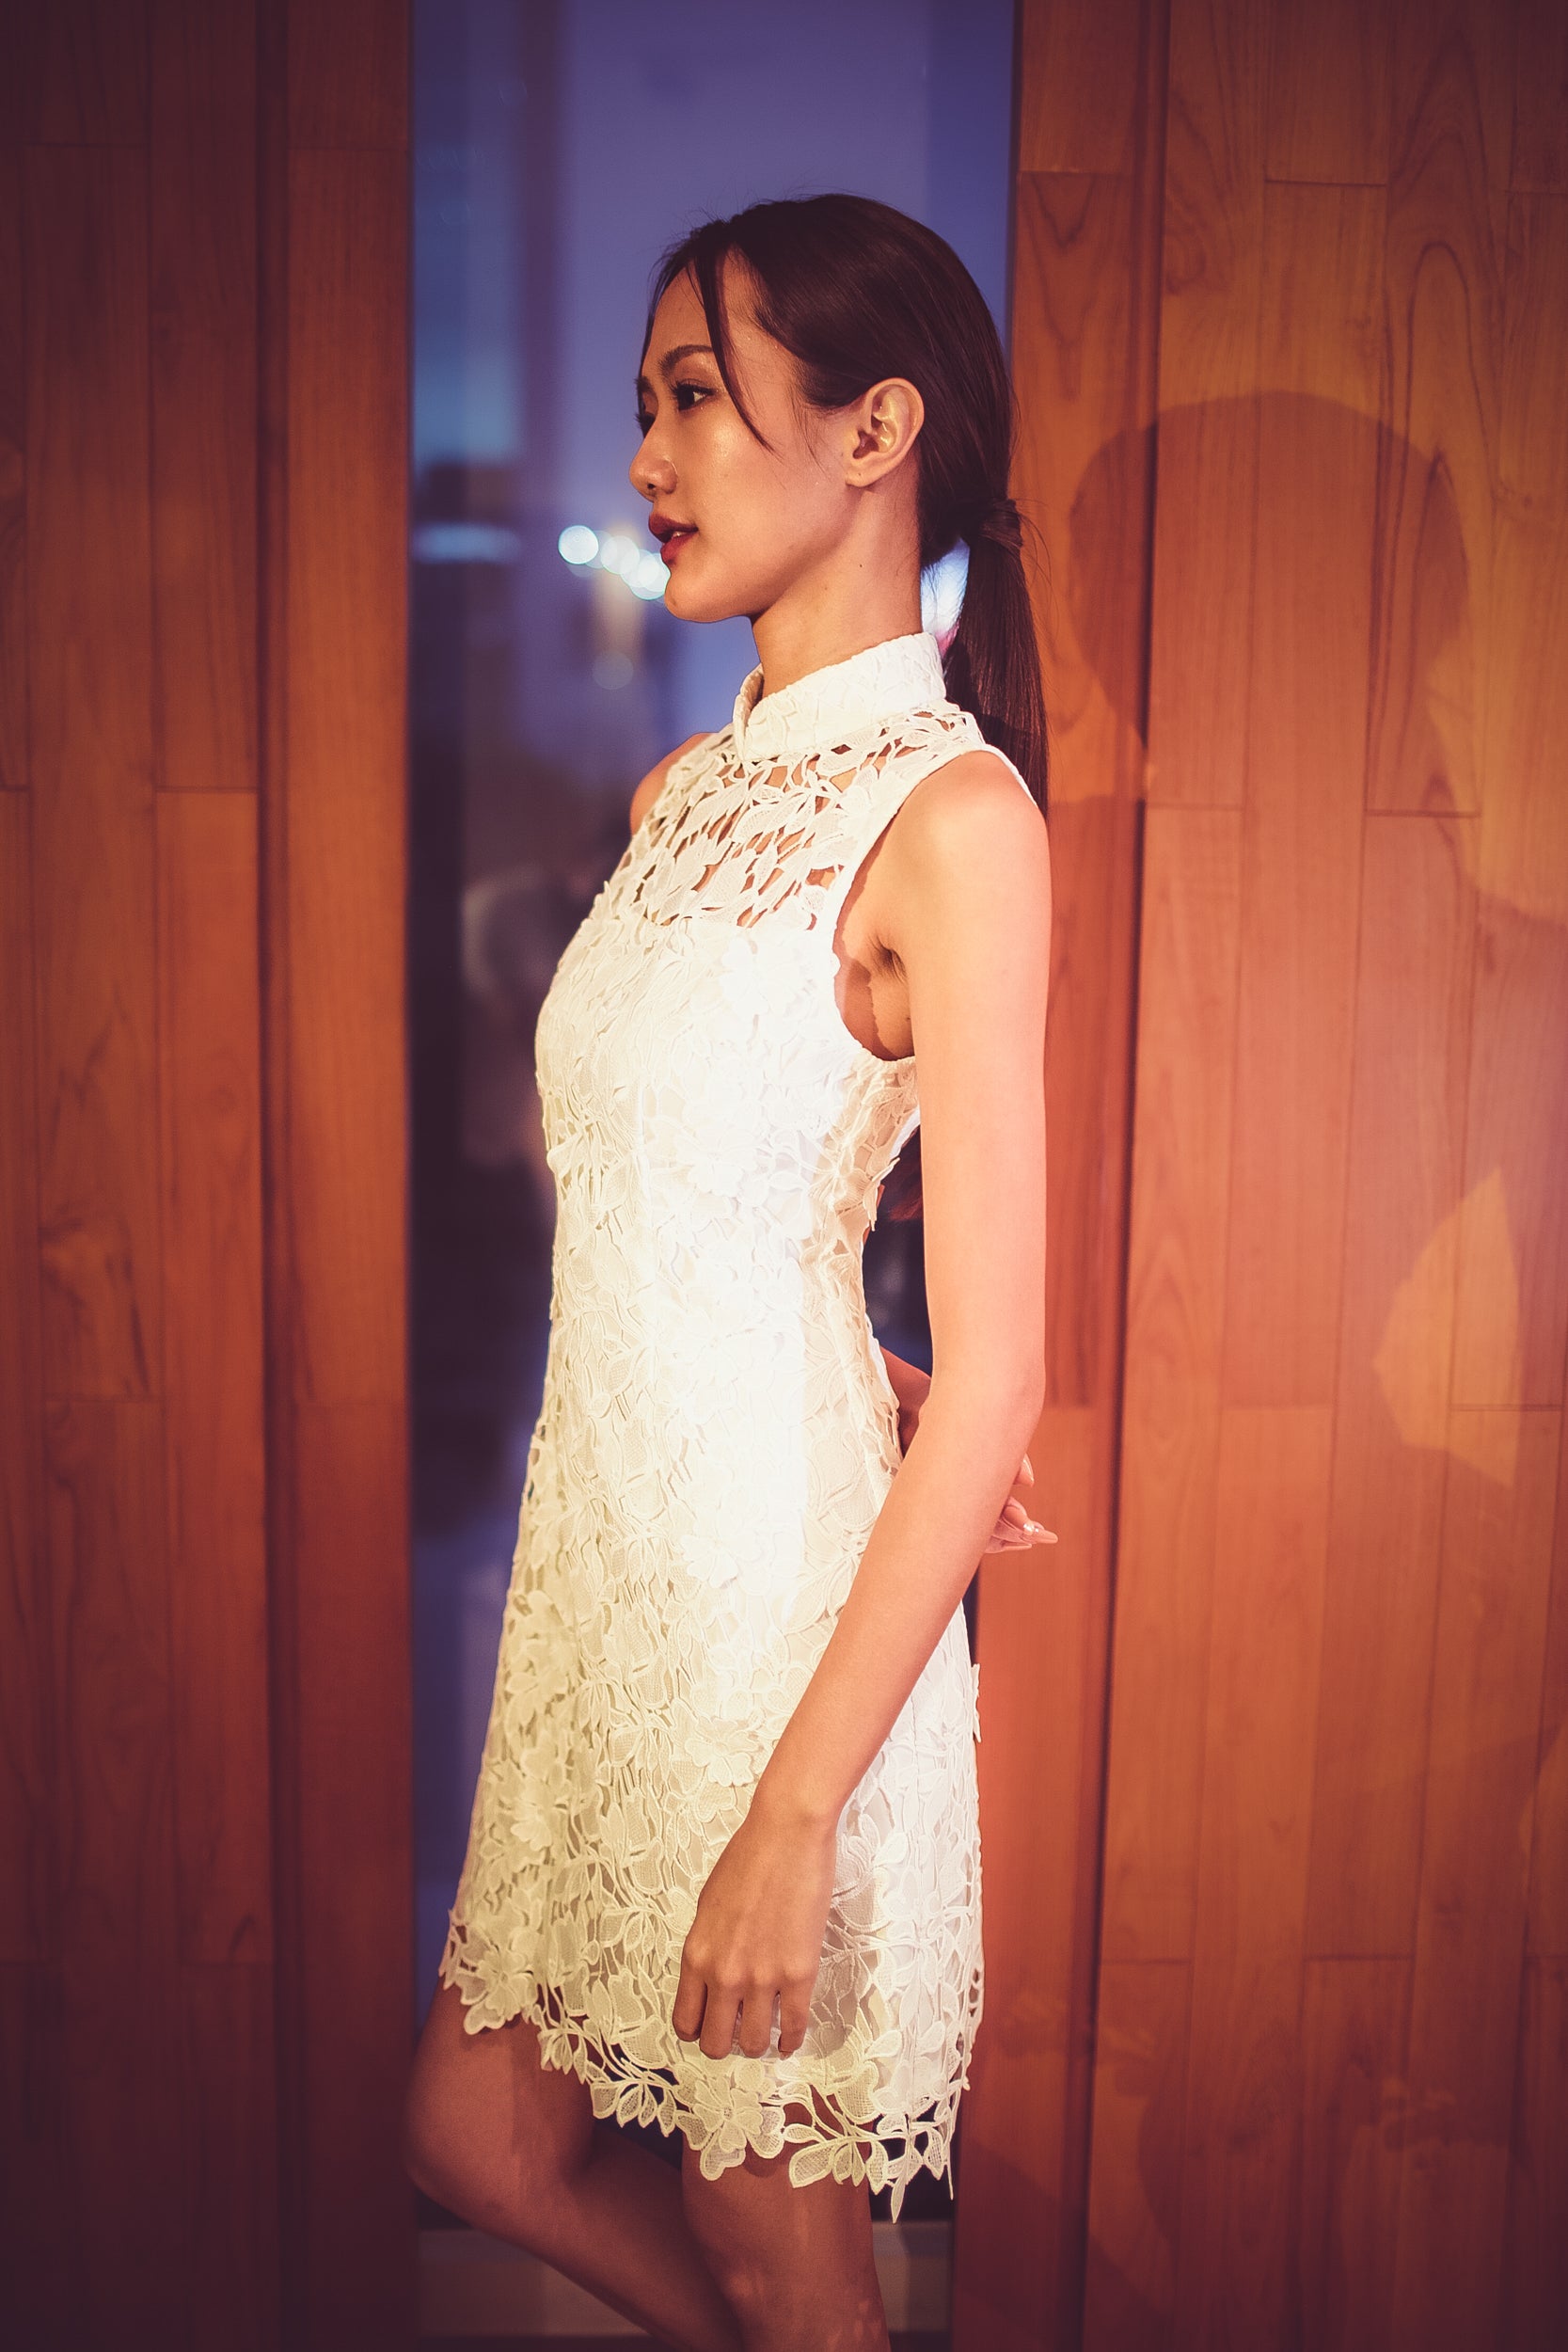 Sleeveless Lace Mini Qipao Dress